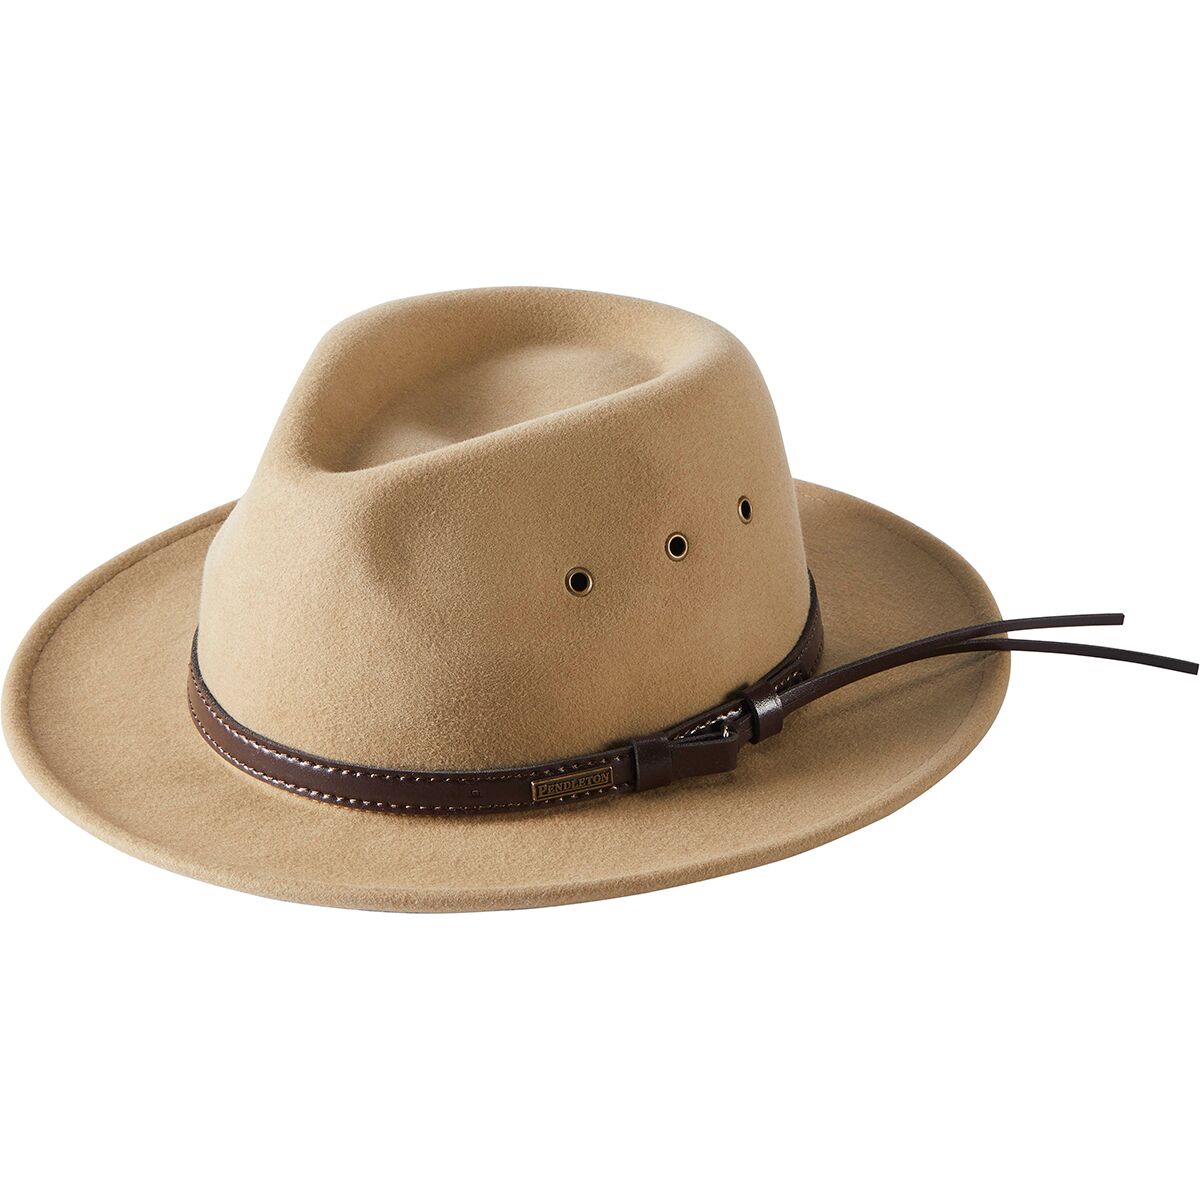 Pendleton Men's Hats | Backcountry.com